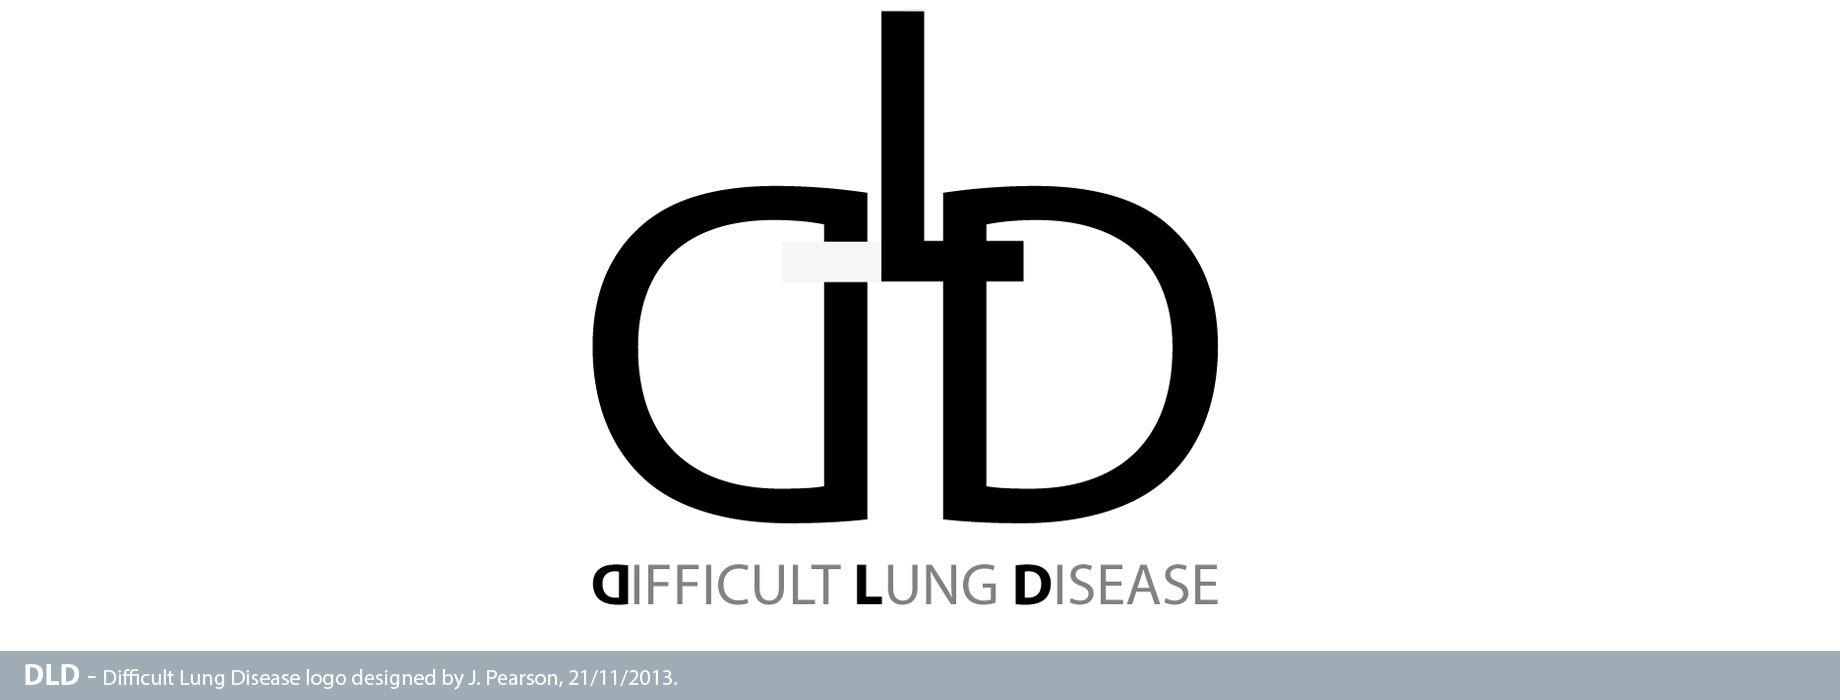 DLD Logo - DLD Logo | Difficult Lung Disease